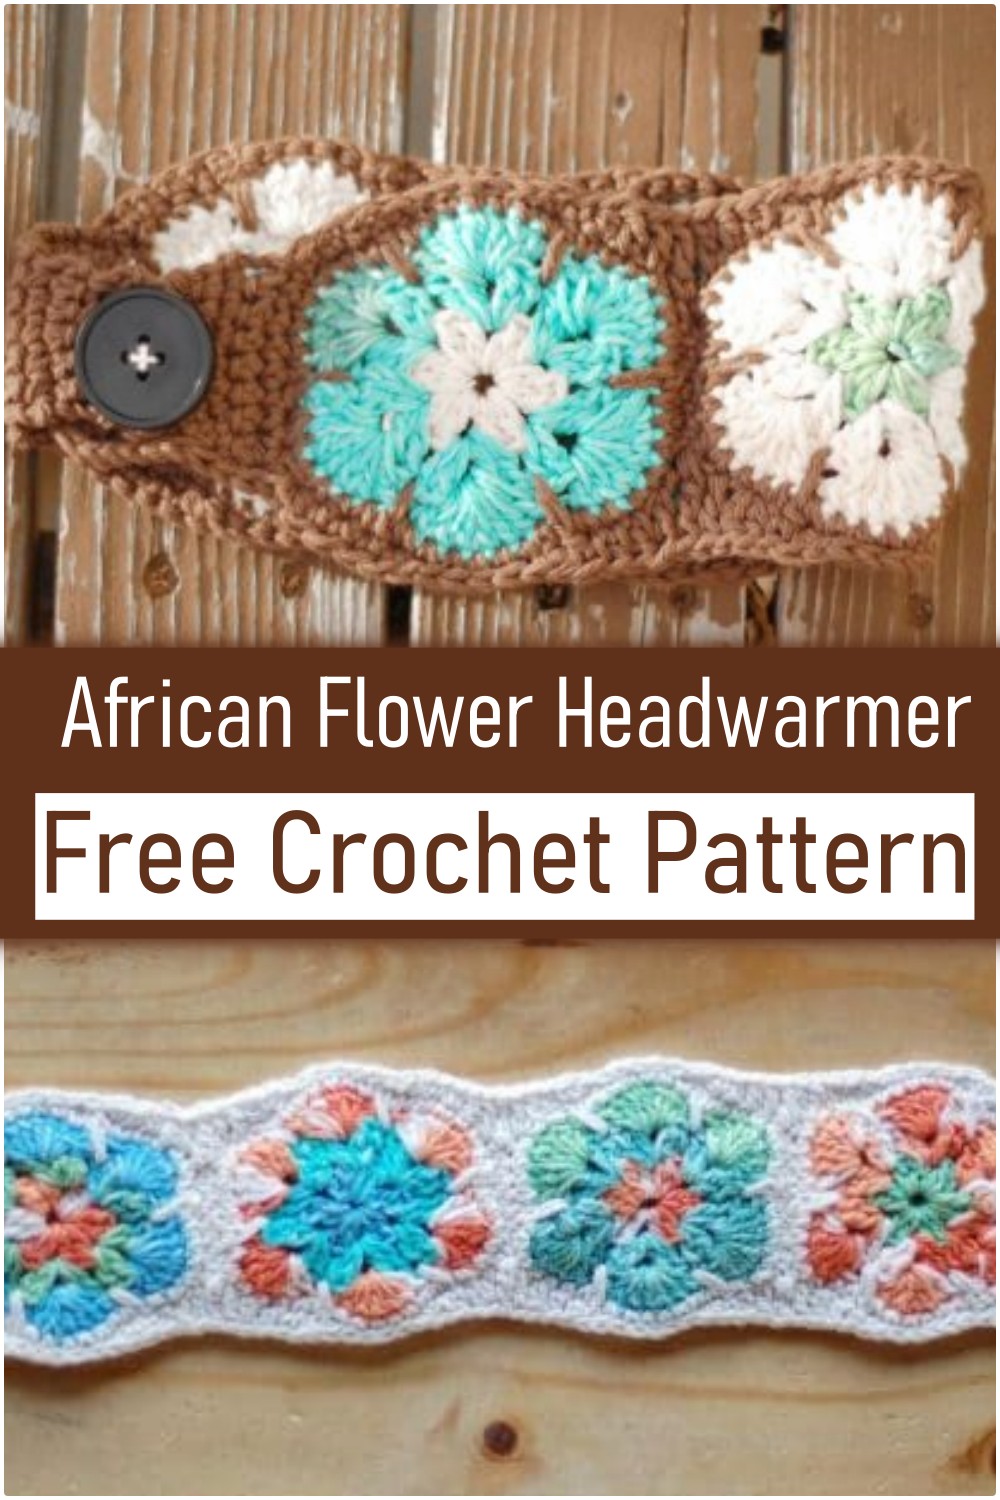 African Flower Headwarmer